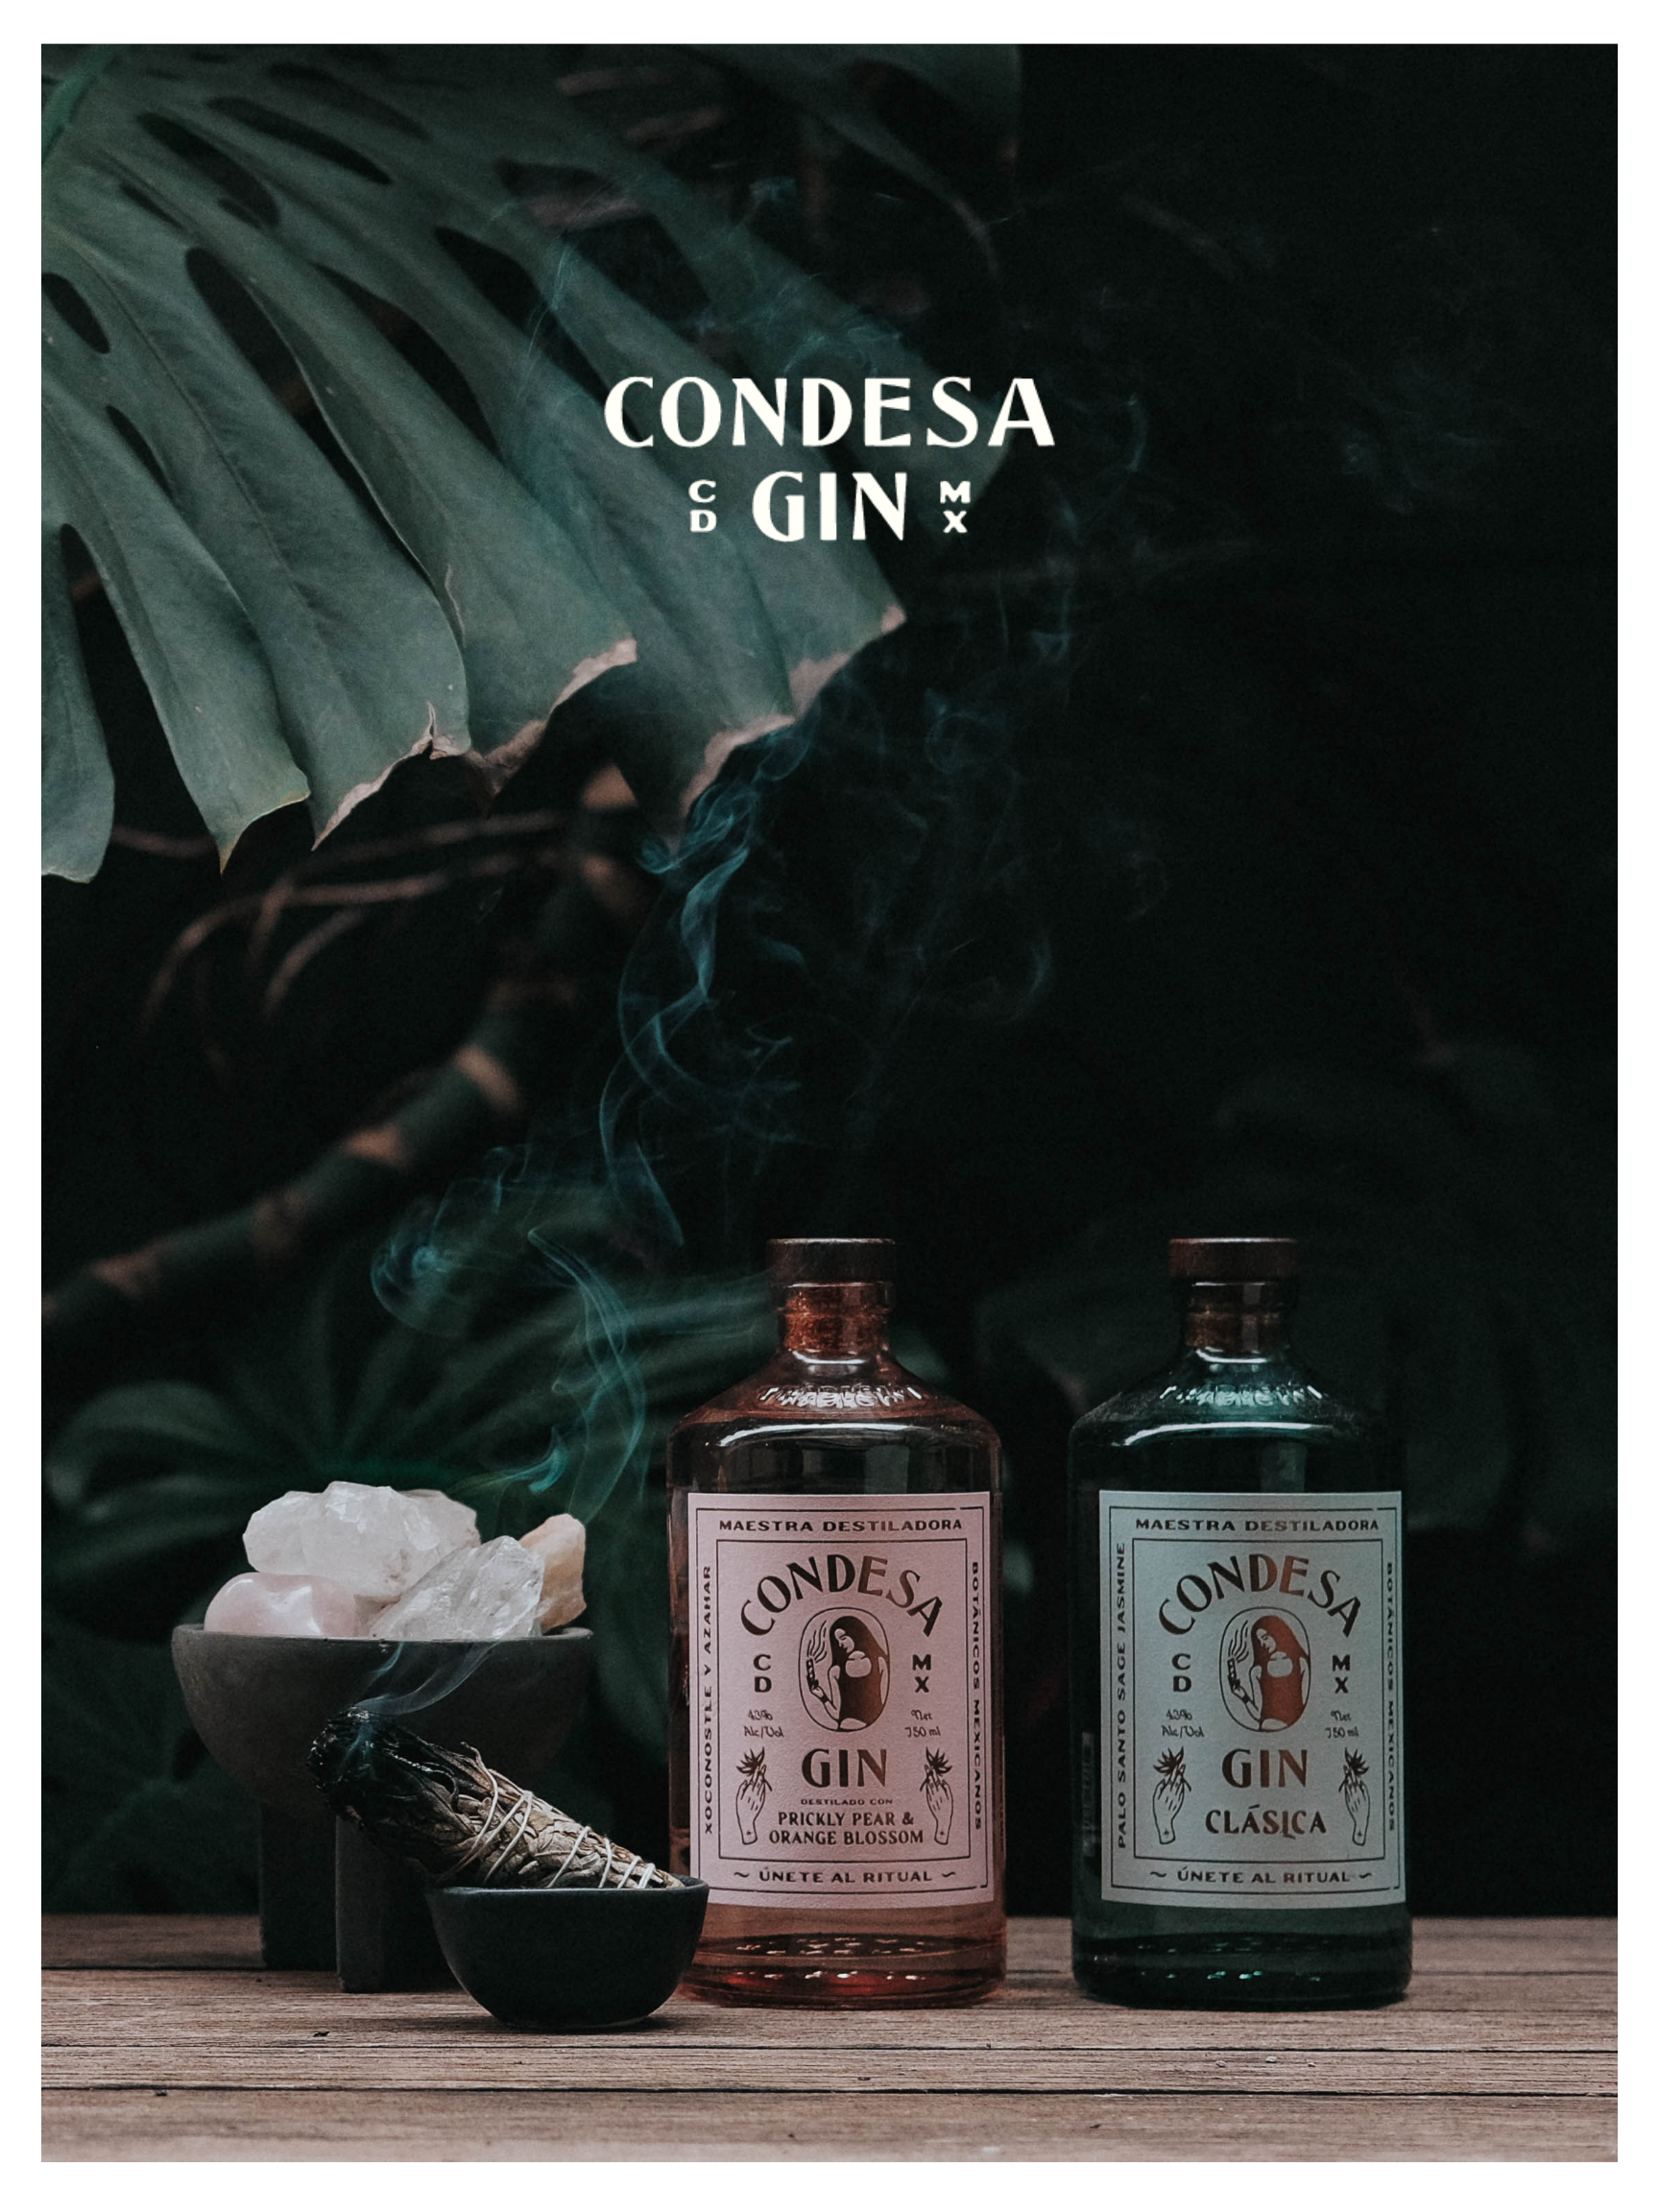 Condeso Gin product shot